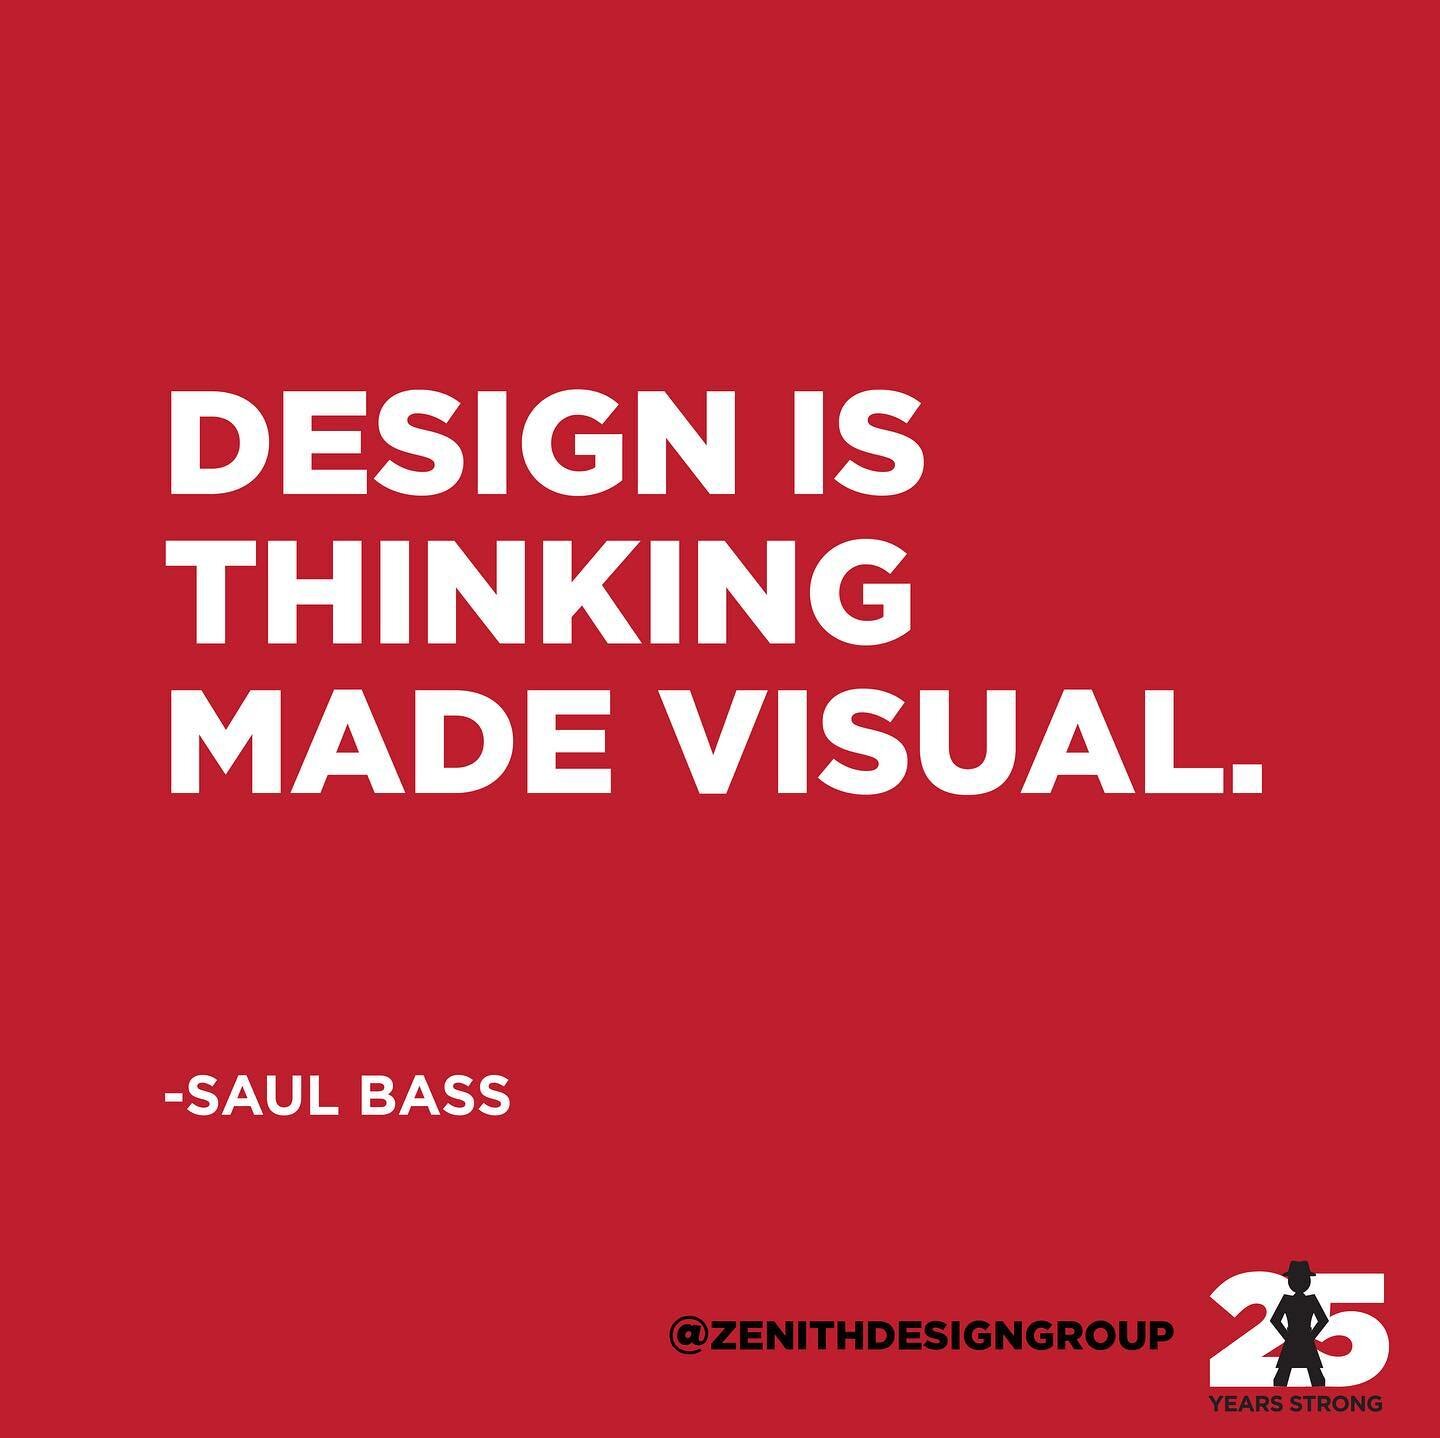 Food for thought.

#ZenithDesignGroup 
#ZDG25
#MarketingConspirators